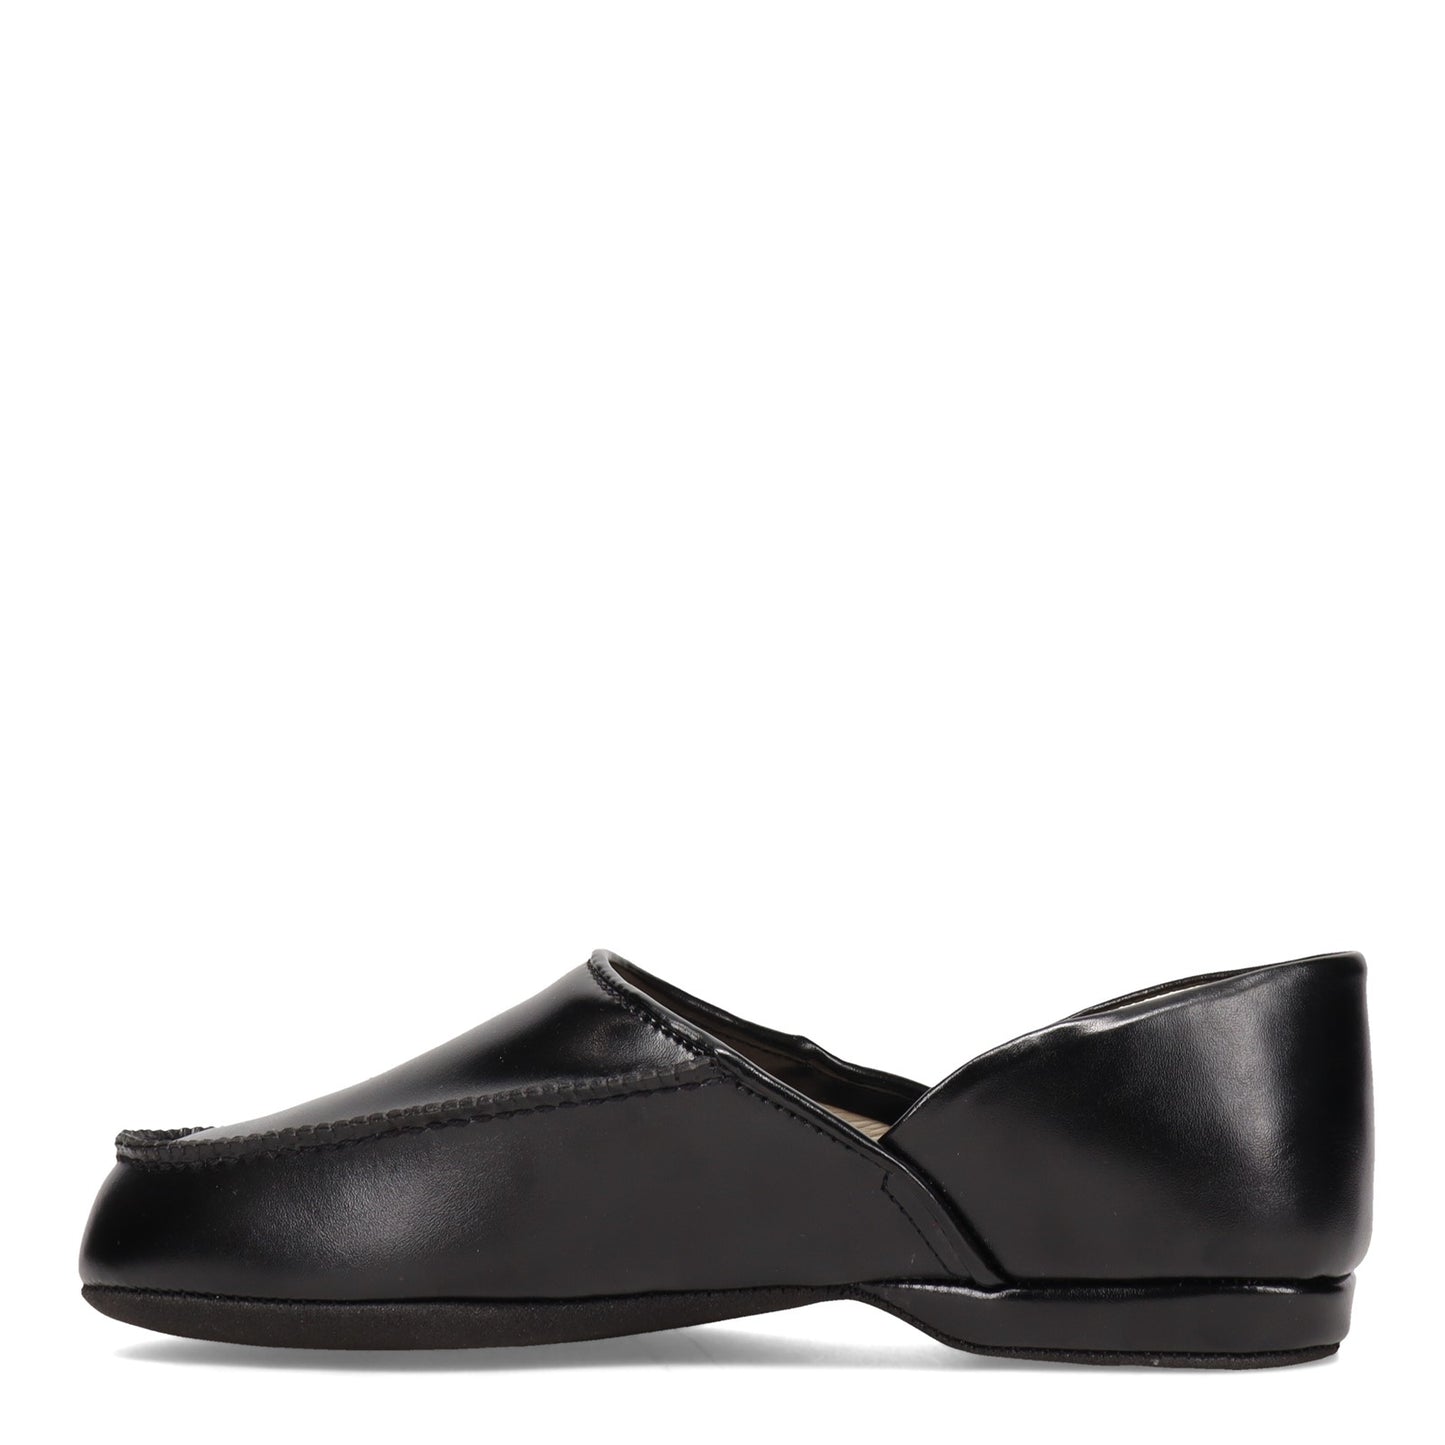 Peltz Shoes  Men's L.B. Evans Chicopee  Slipper BLACK 2199